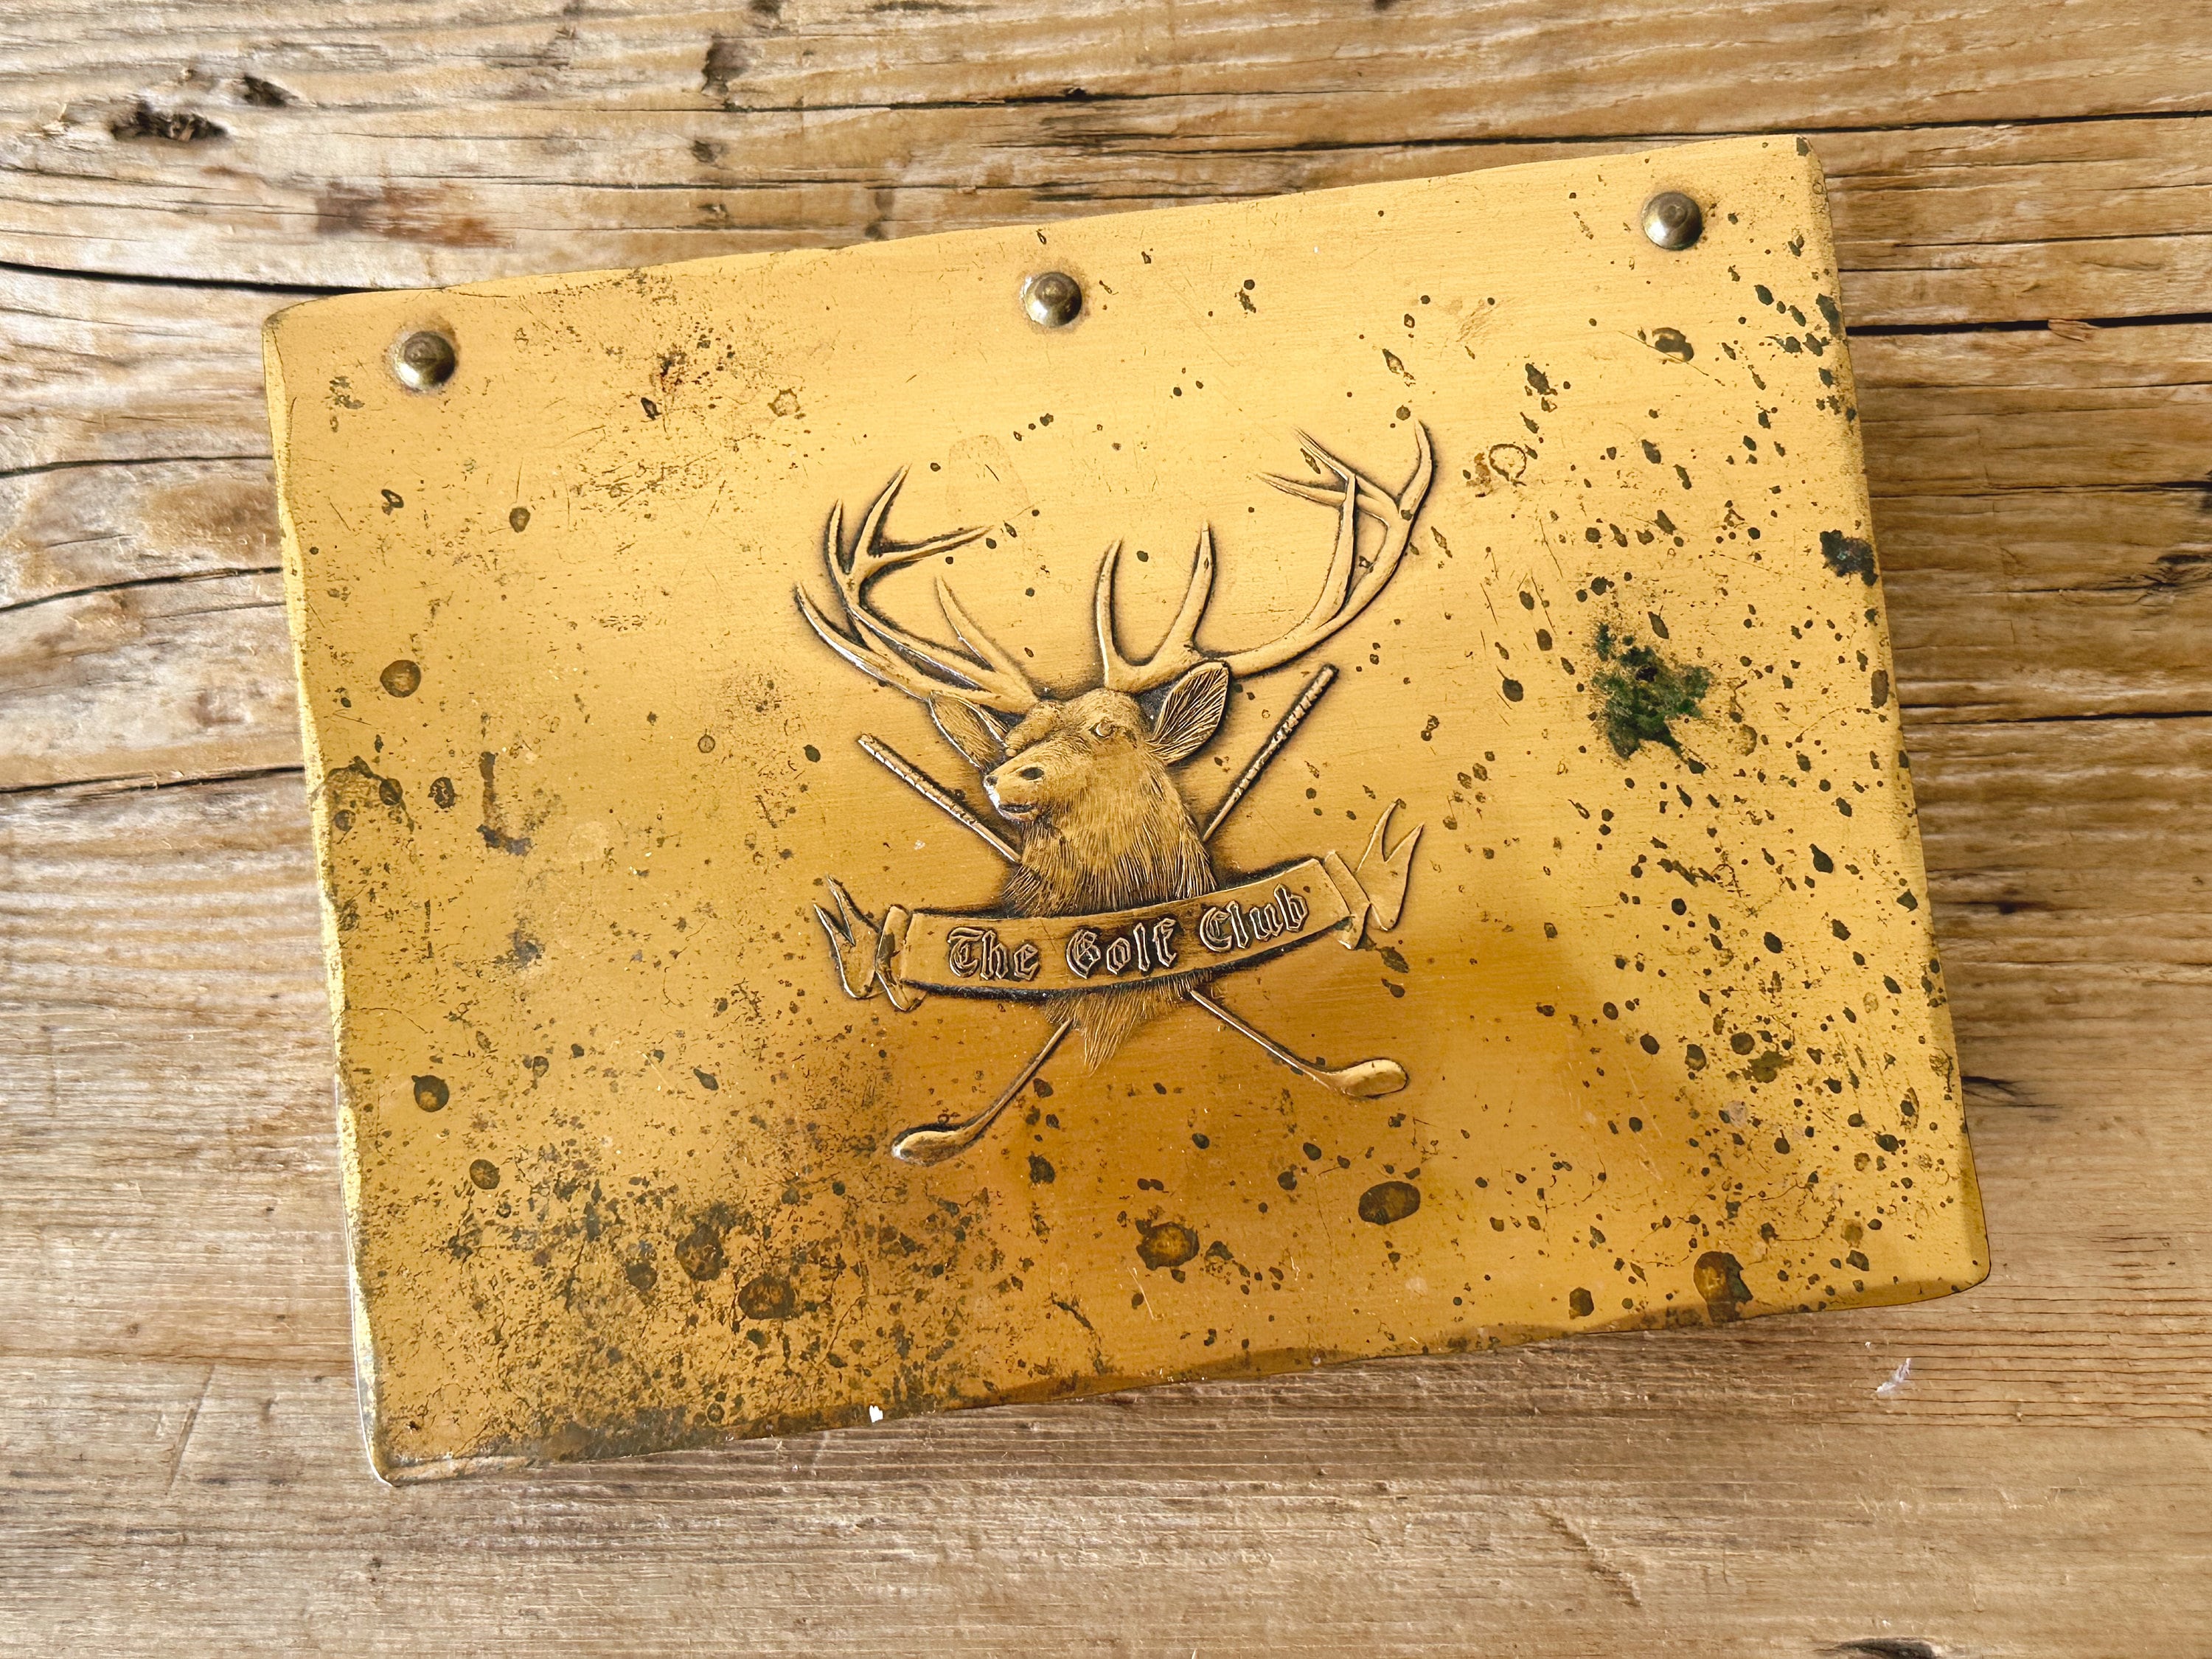 Vintage Wendell August Forge Handmade Bronze Keepsake Box | The Golf Club | Jewelry Box Cigar Box | Office Desktop Storage | Gift for Him